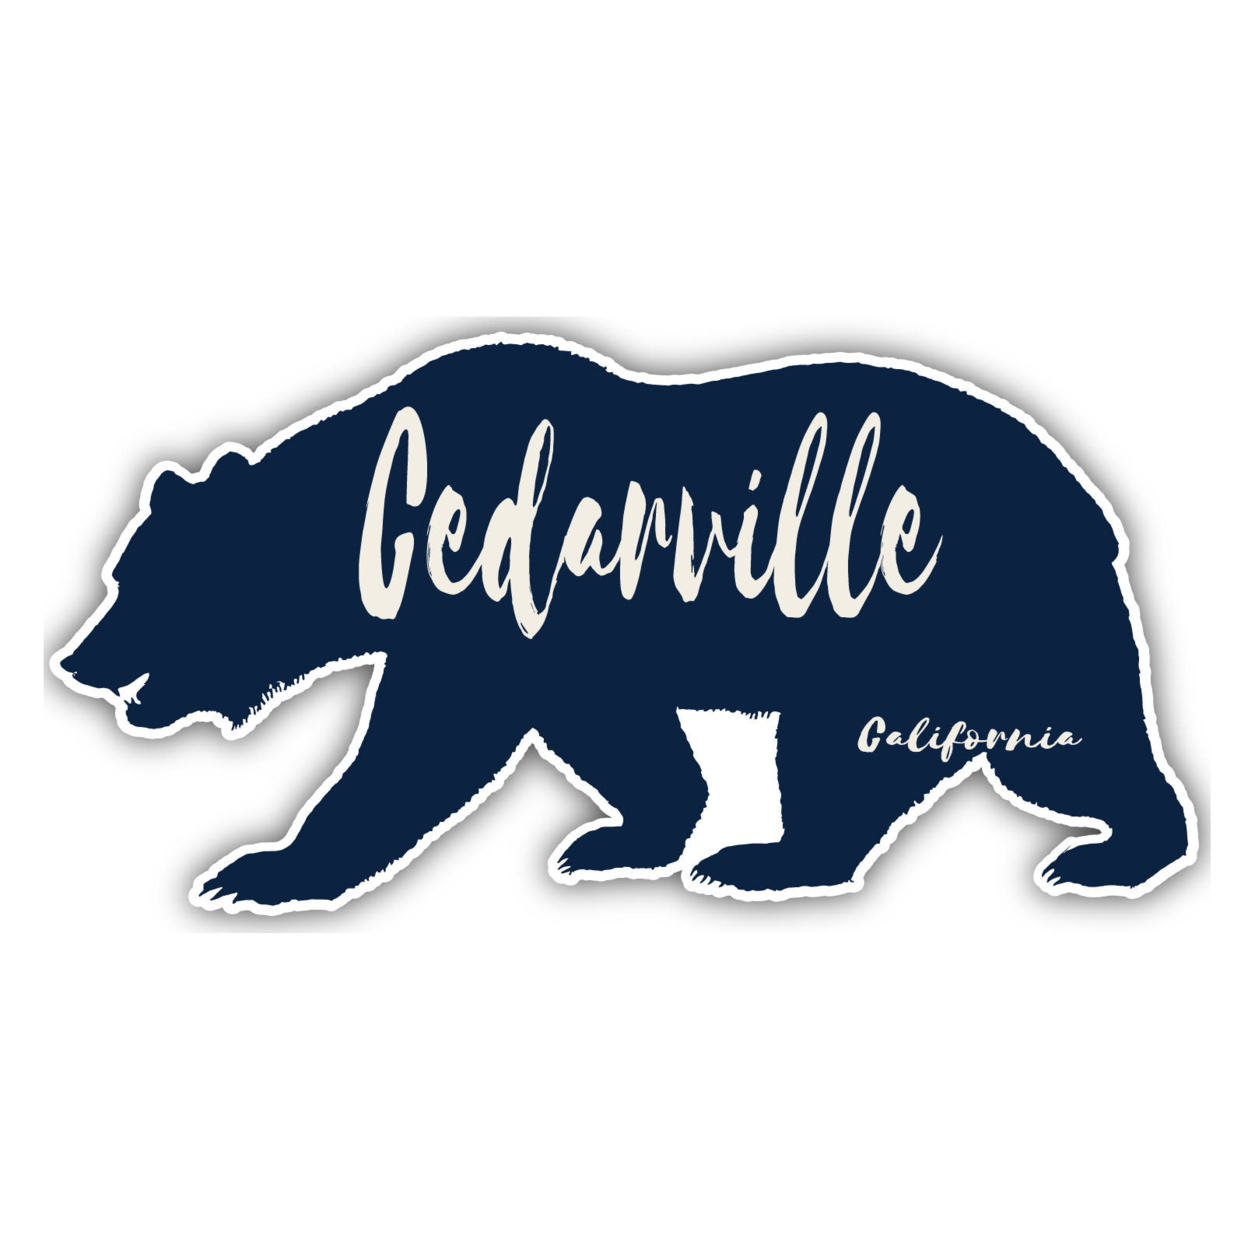 Cedarville California Souvenir Decorative Stickers (Choose Theme And Size) - Single Unit, 8-Inch, Bear